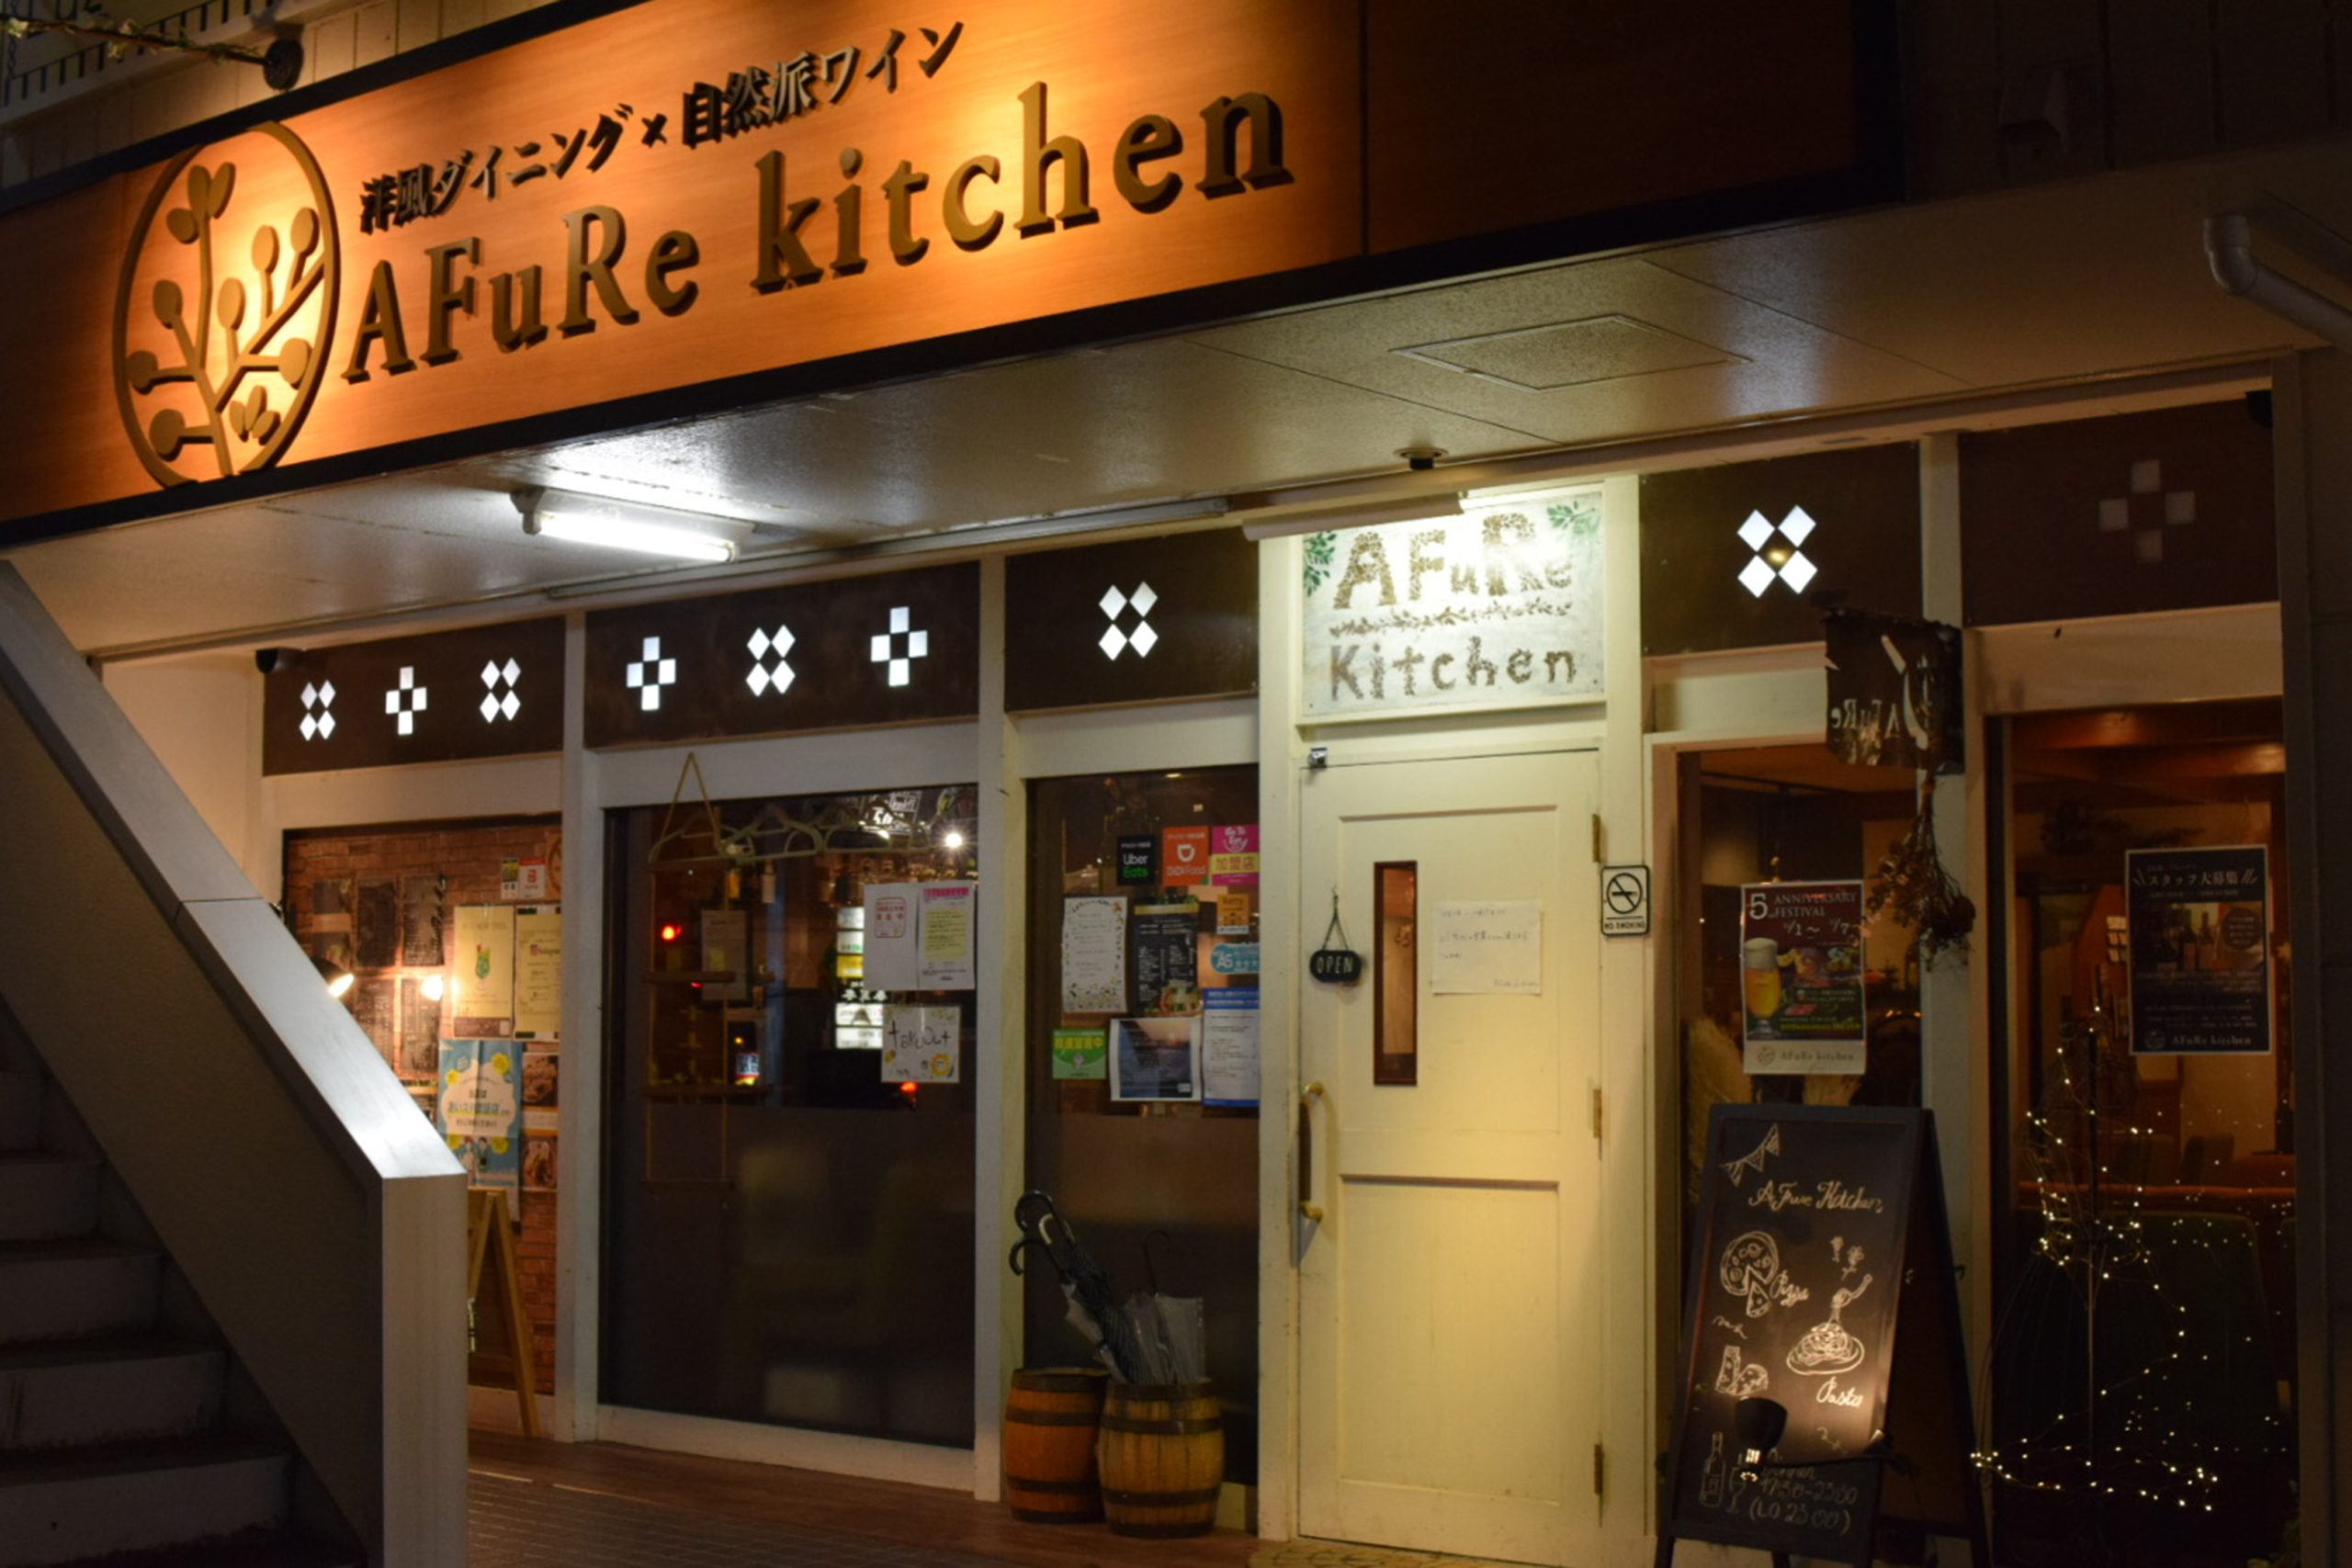 AFuRe kitchen